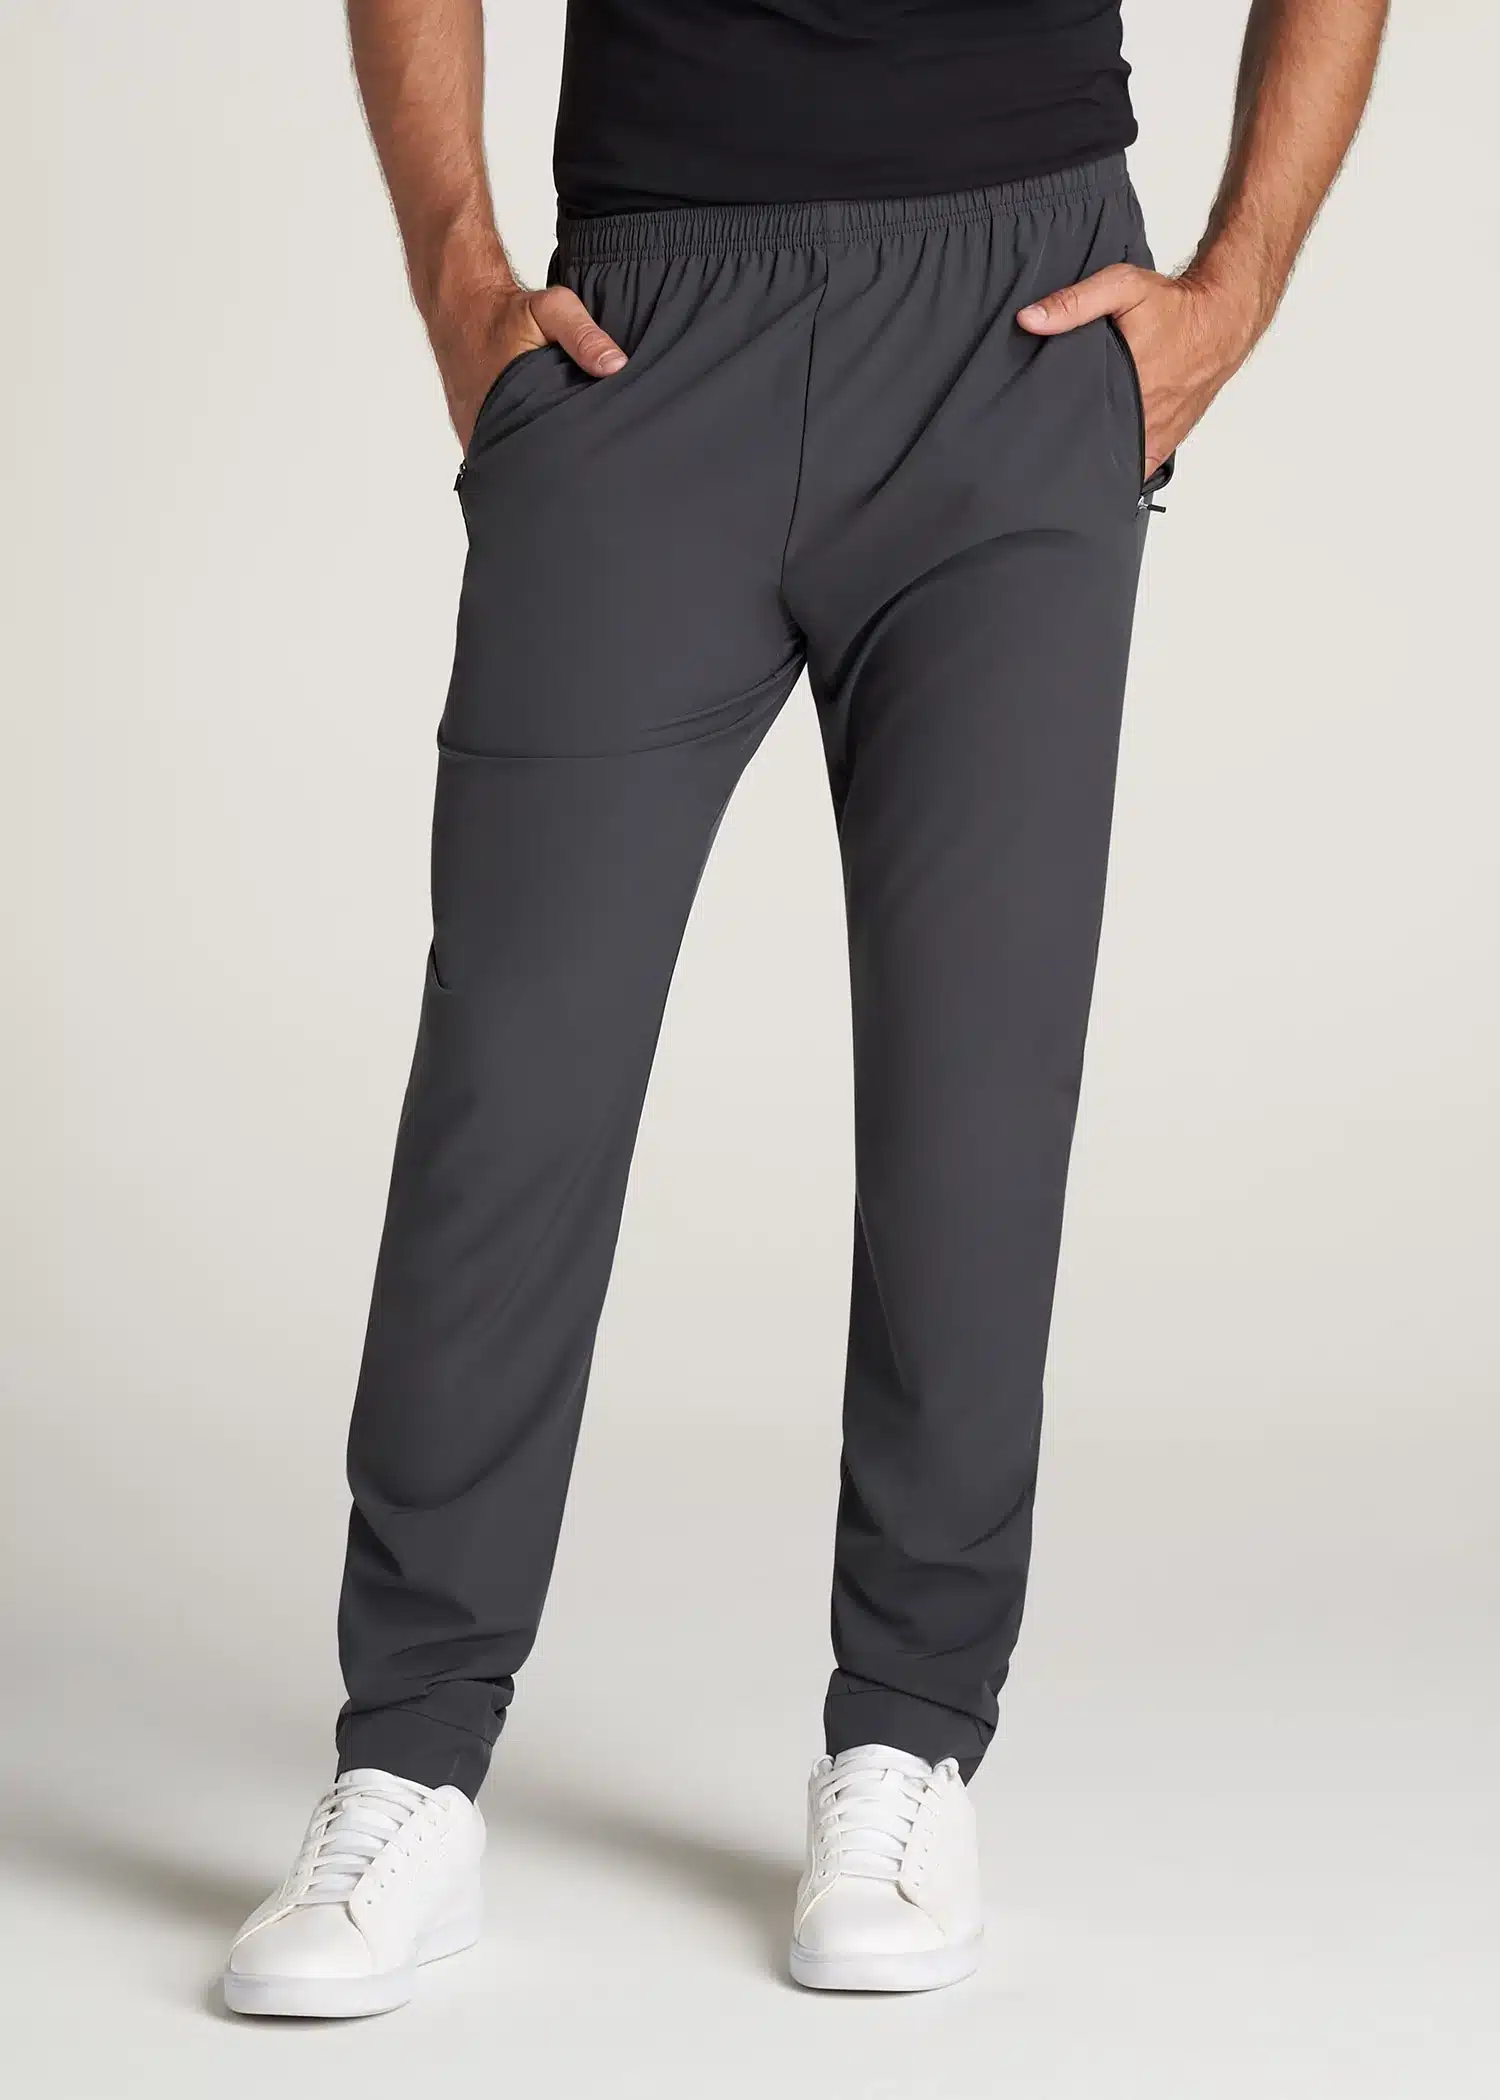 Tall Men's Slim Fit Athletic Pants: Cotton Jersey - Graphite